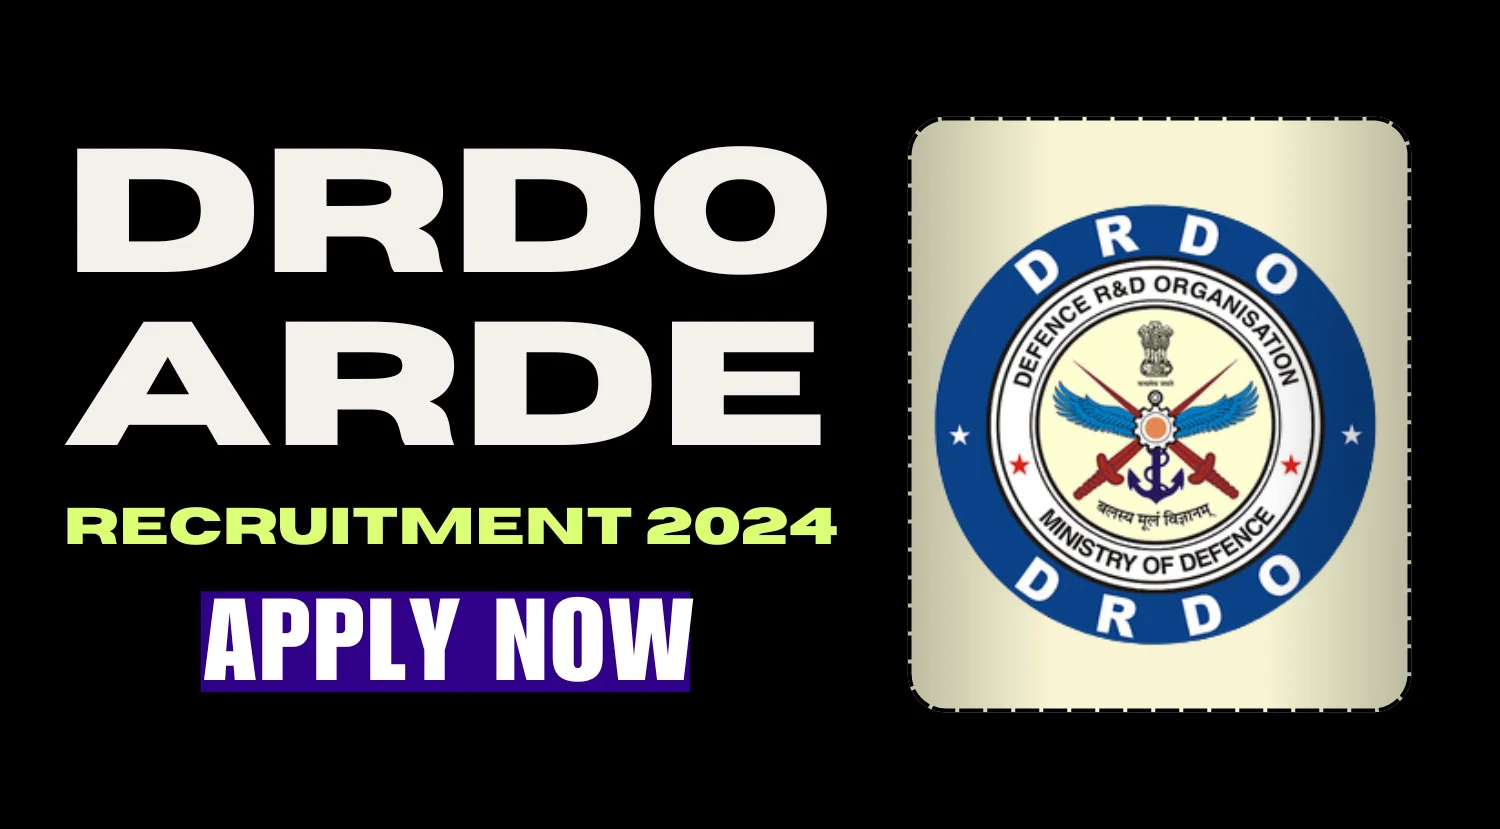 DRDO ARDE Recruitment 2024 Notification